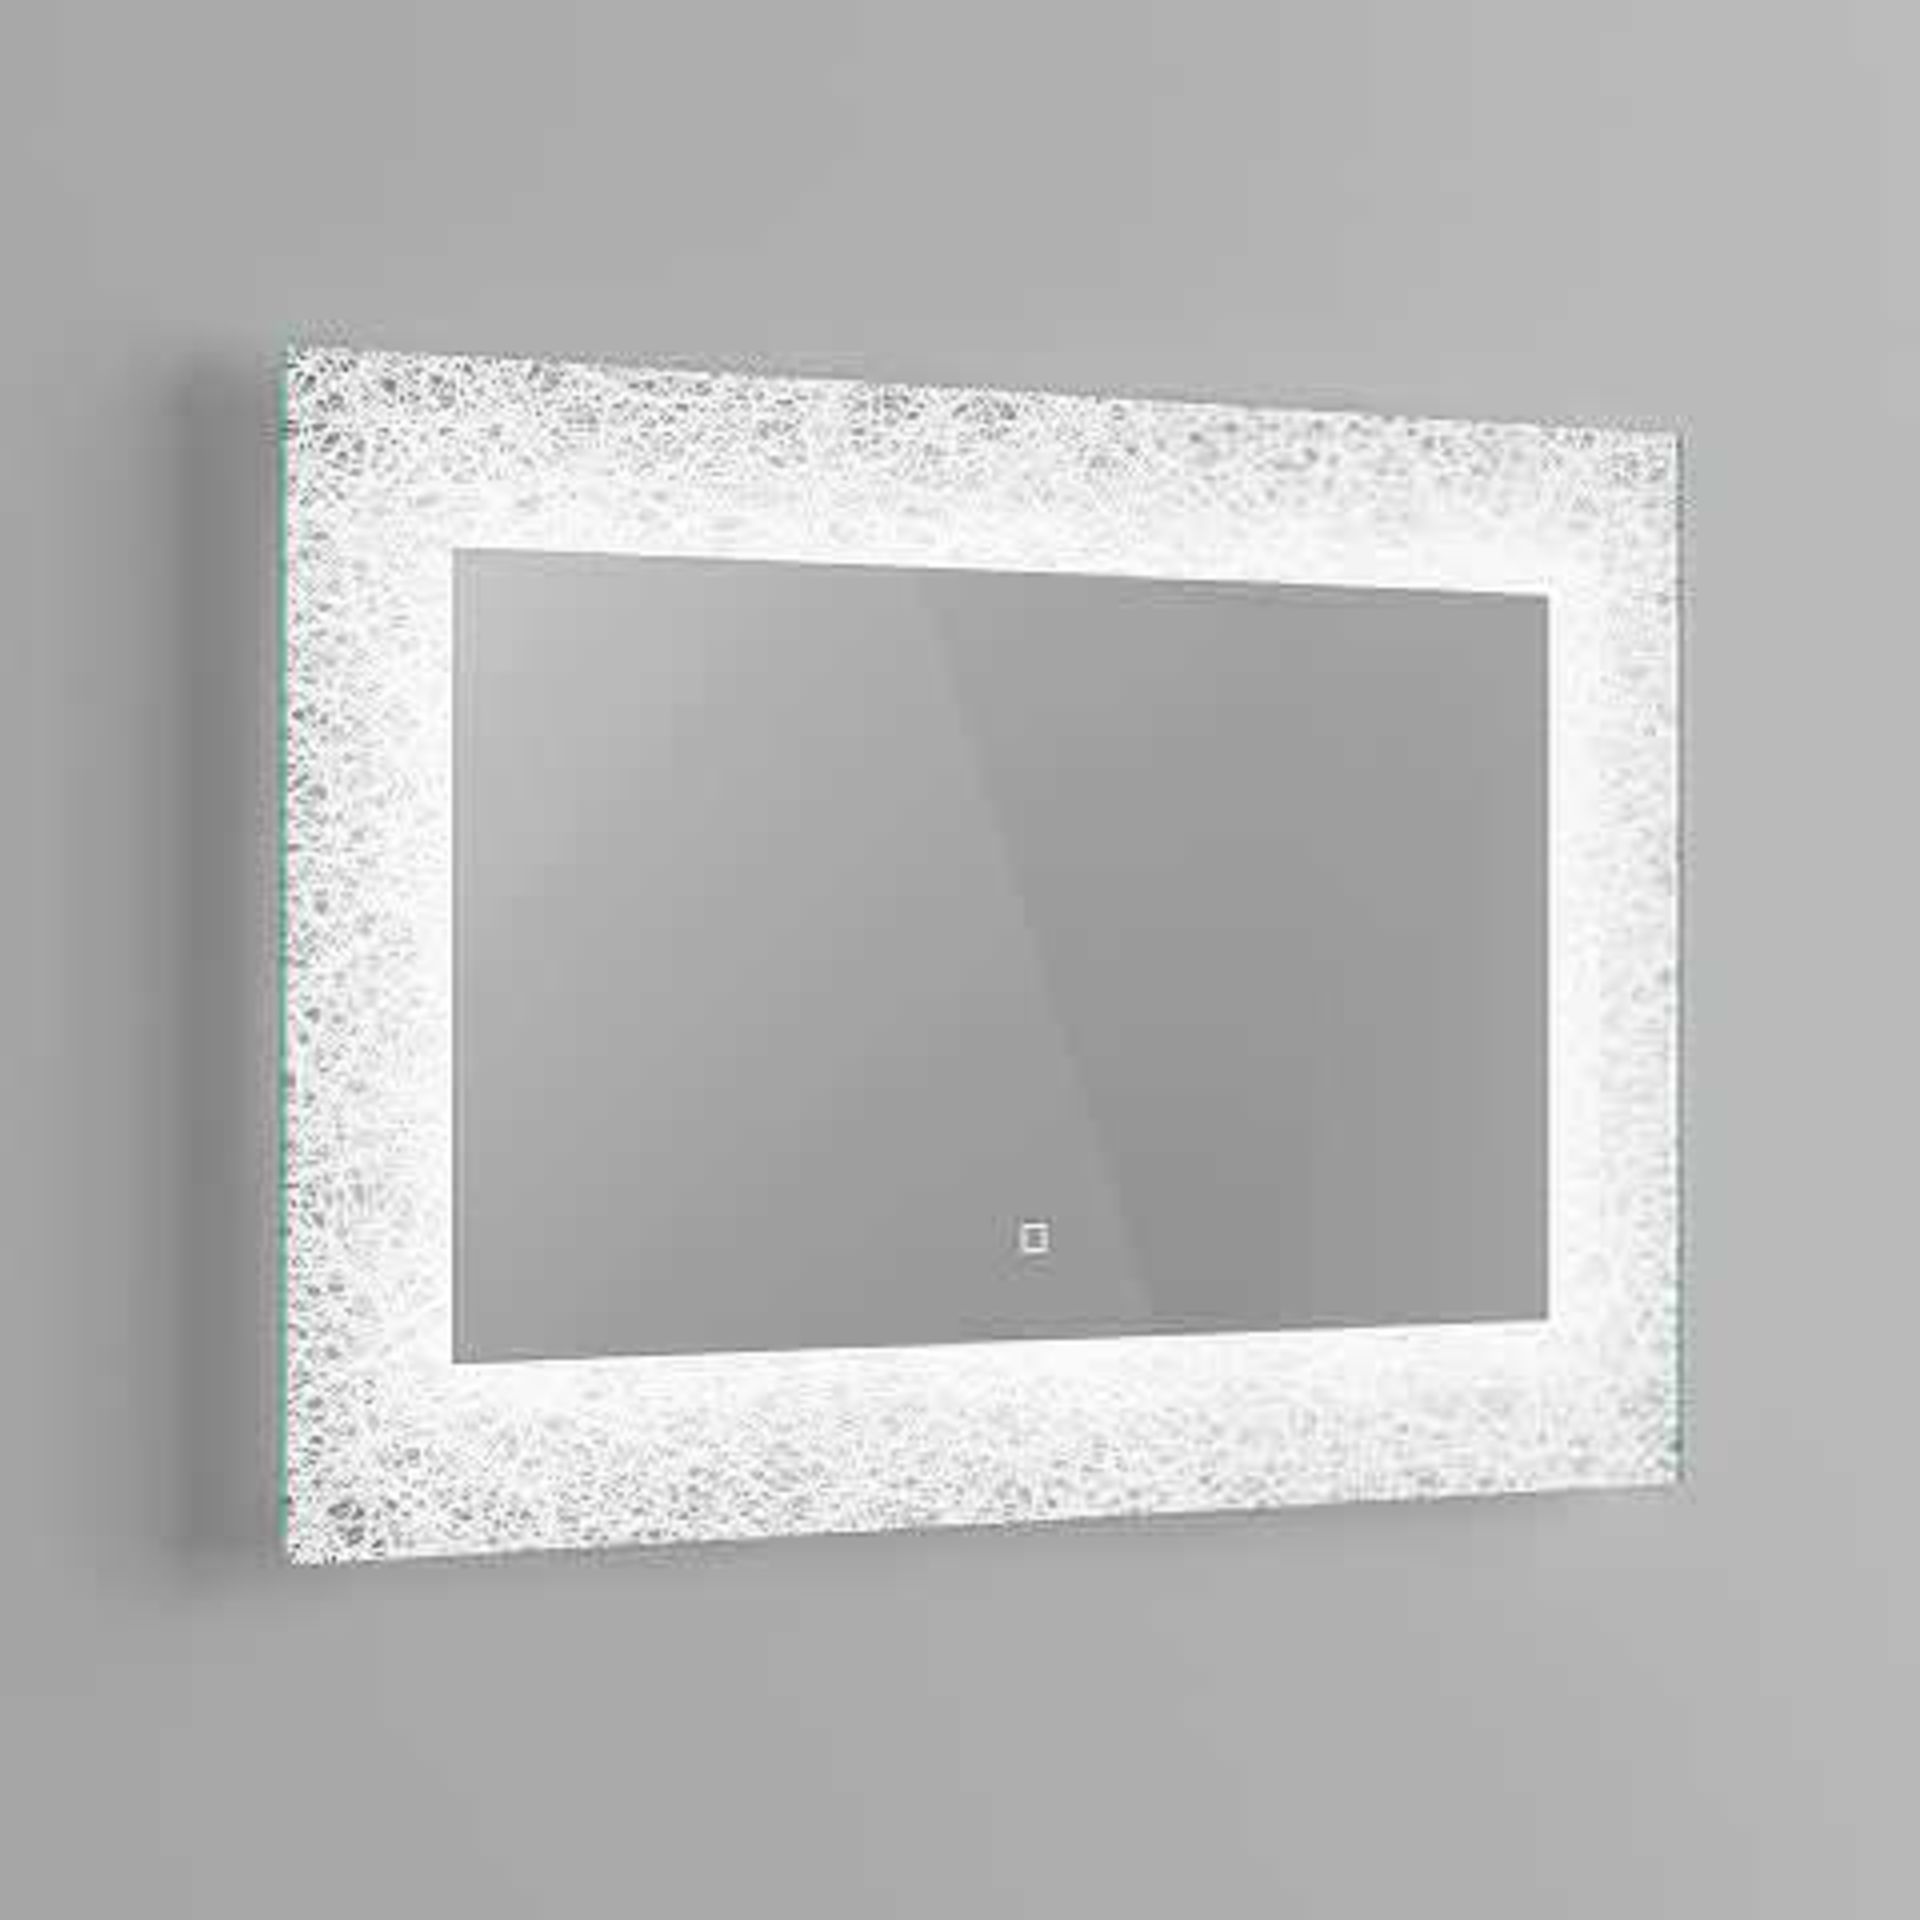 (N4) 600x900mm Galactic Designer Illuminated LED Mirror - Switch Control. RRP £399.99. Light up your - Bild 2 aus 4